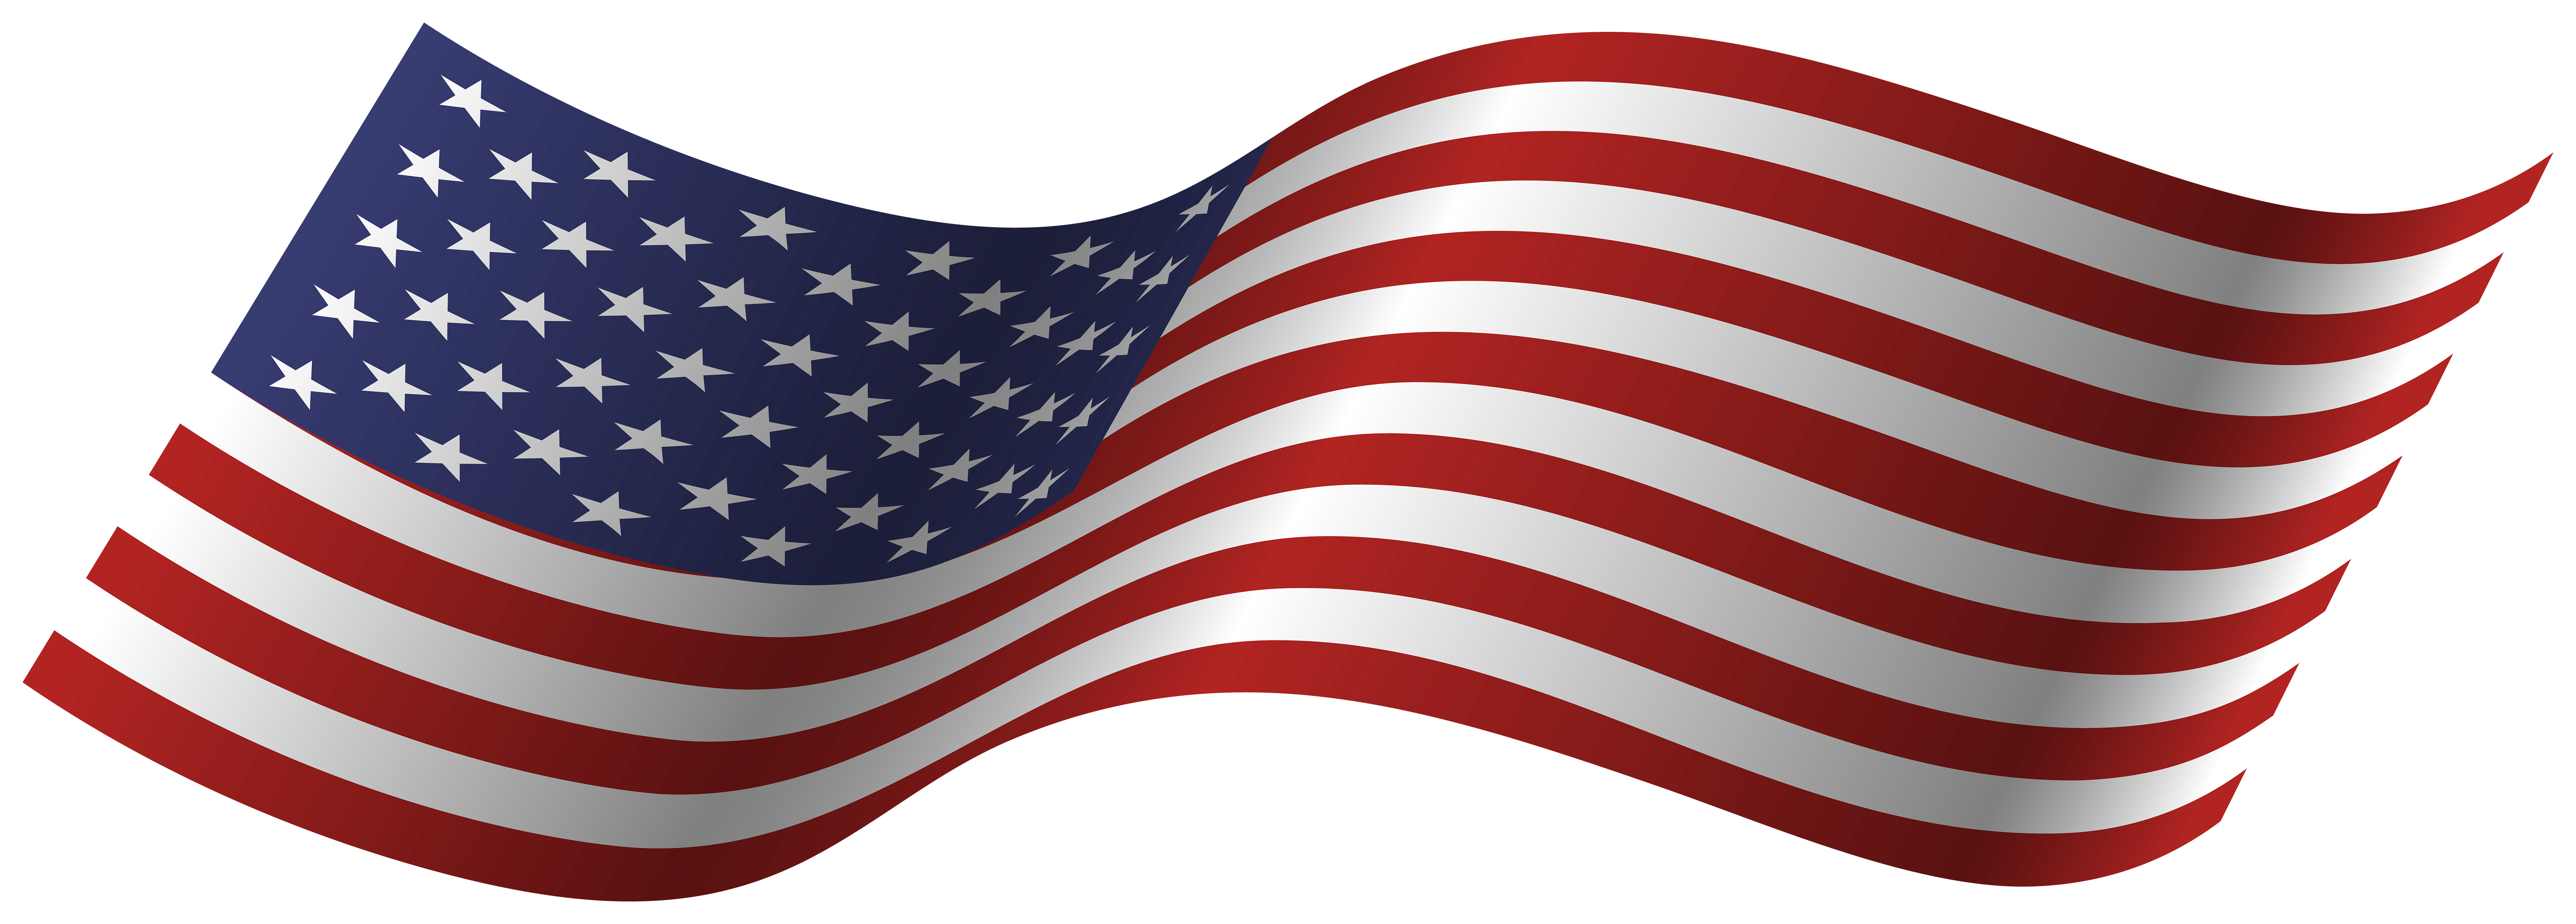 USA Waving Flag PNG Clipart.